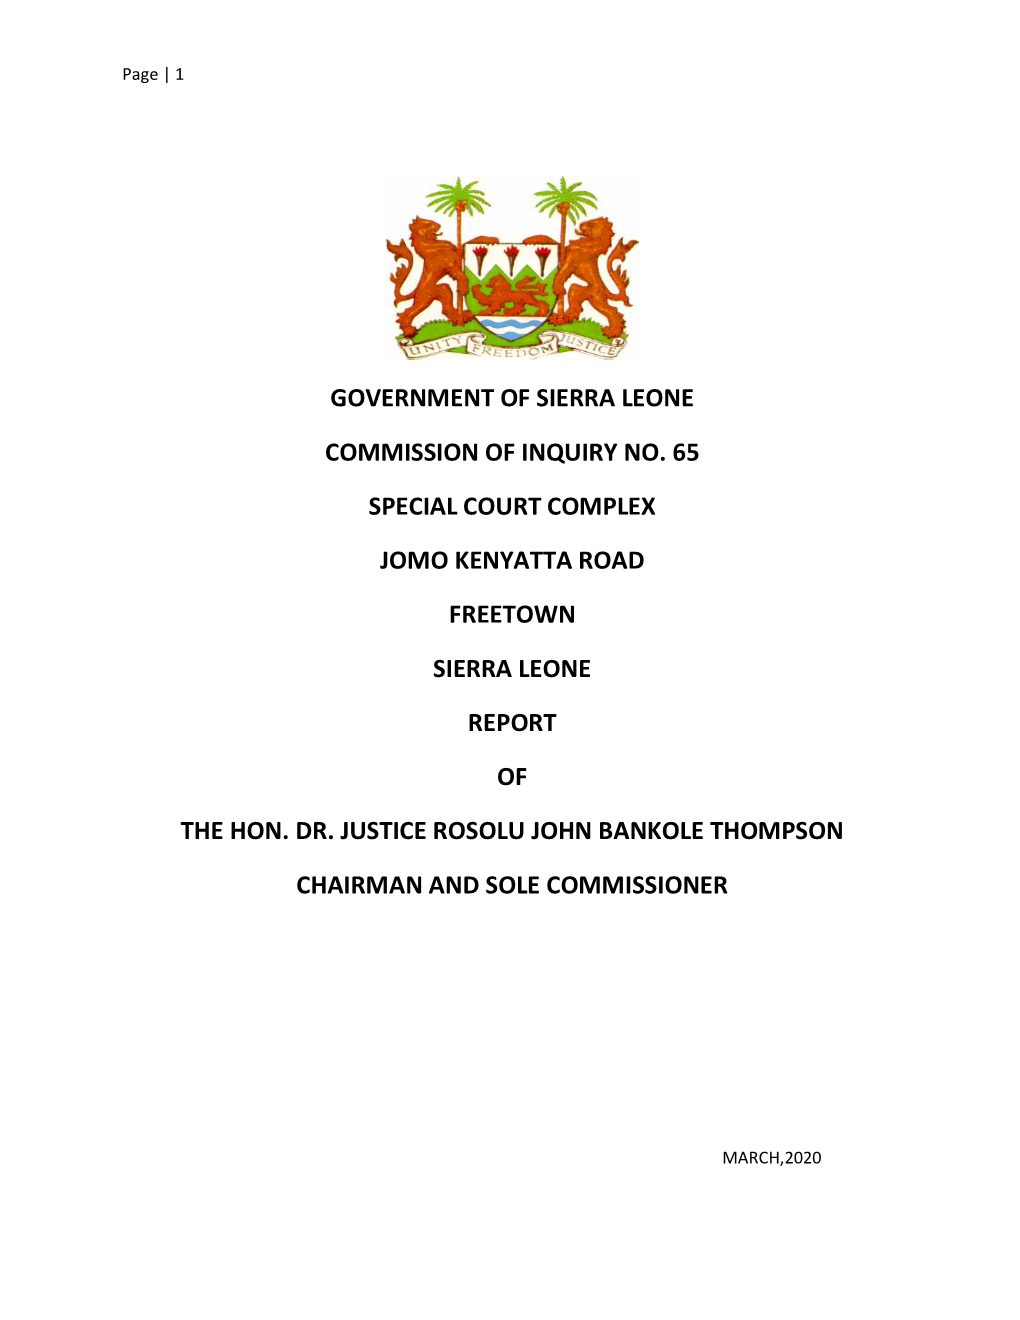 Justice Bankole Thompson Full Report